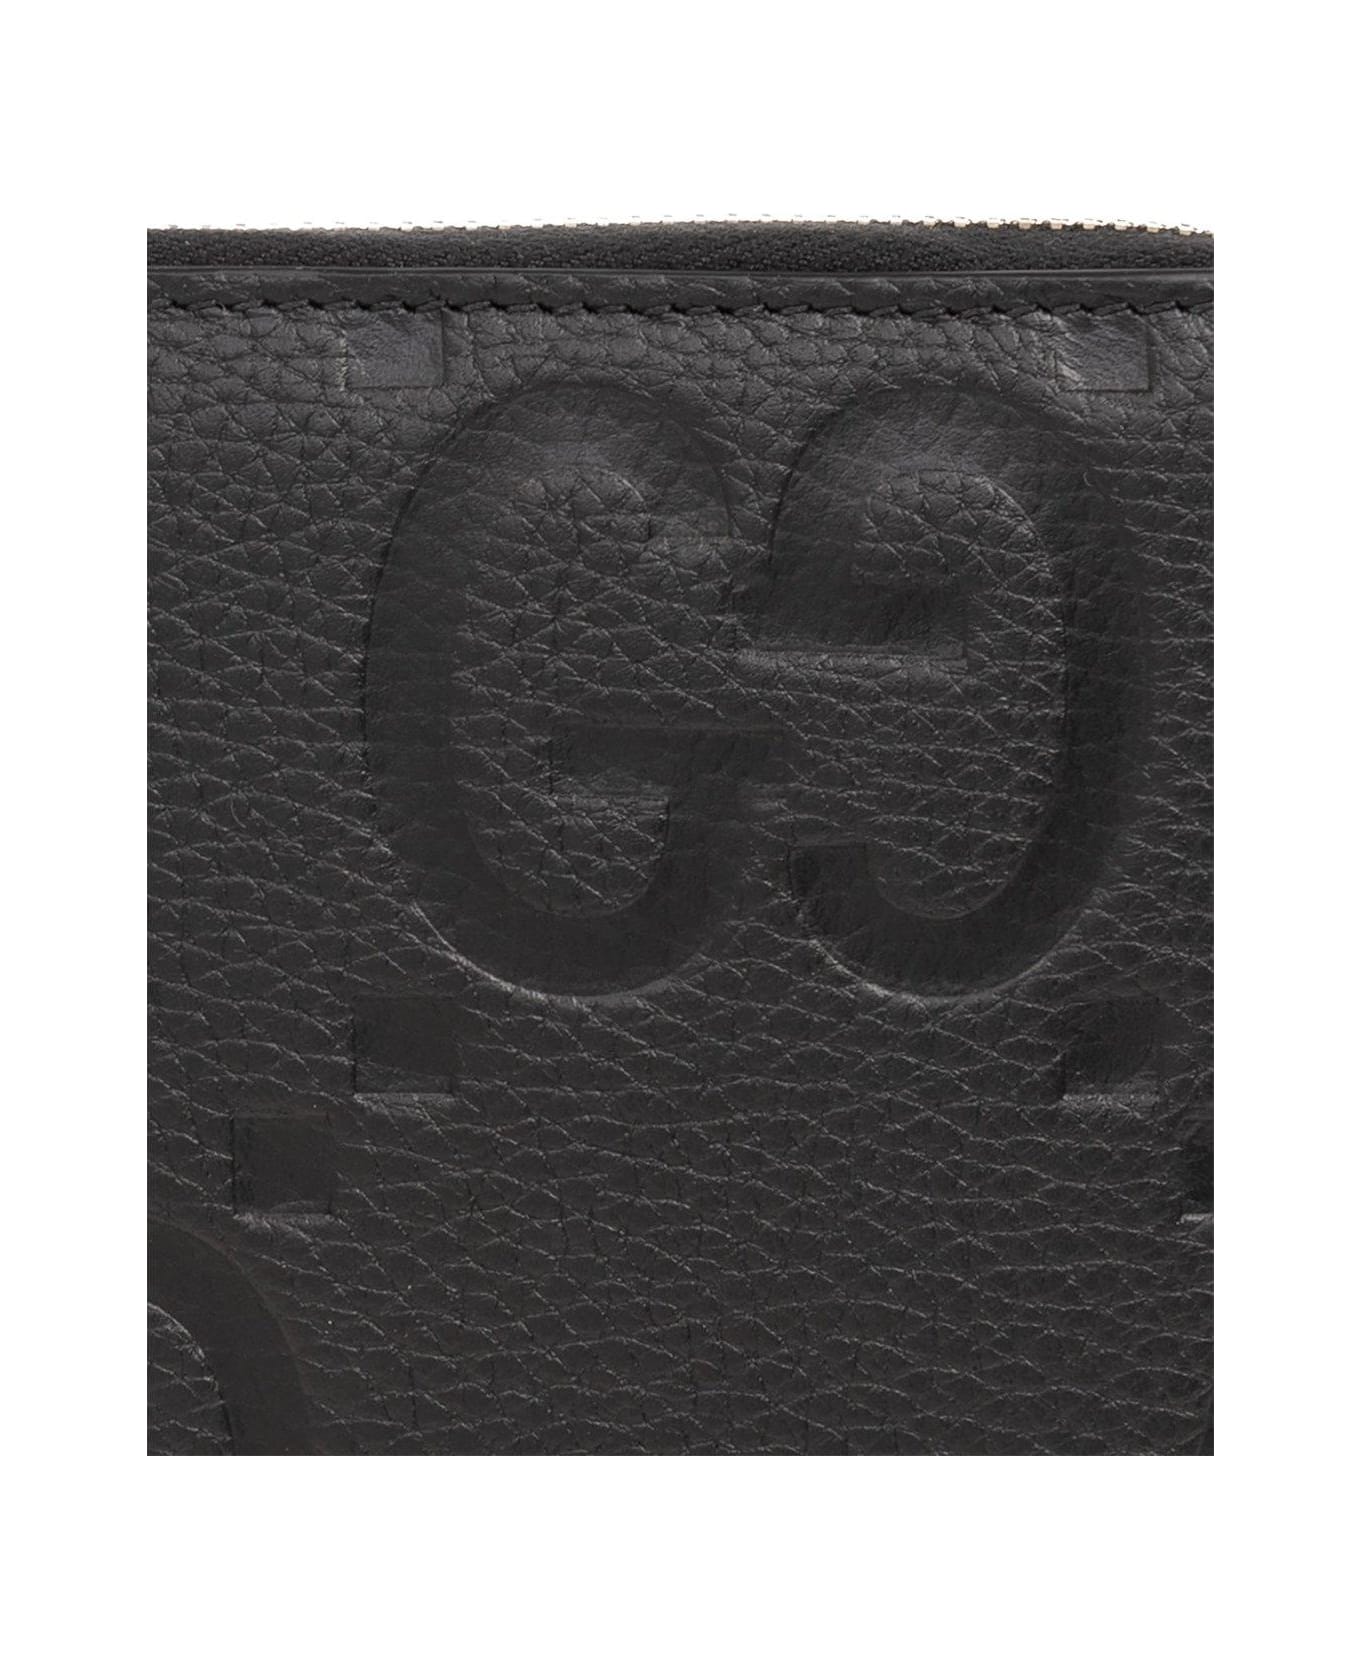 Gucci princetown Logo Embossed Zip-around Wallet - Black